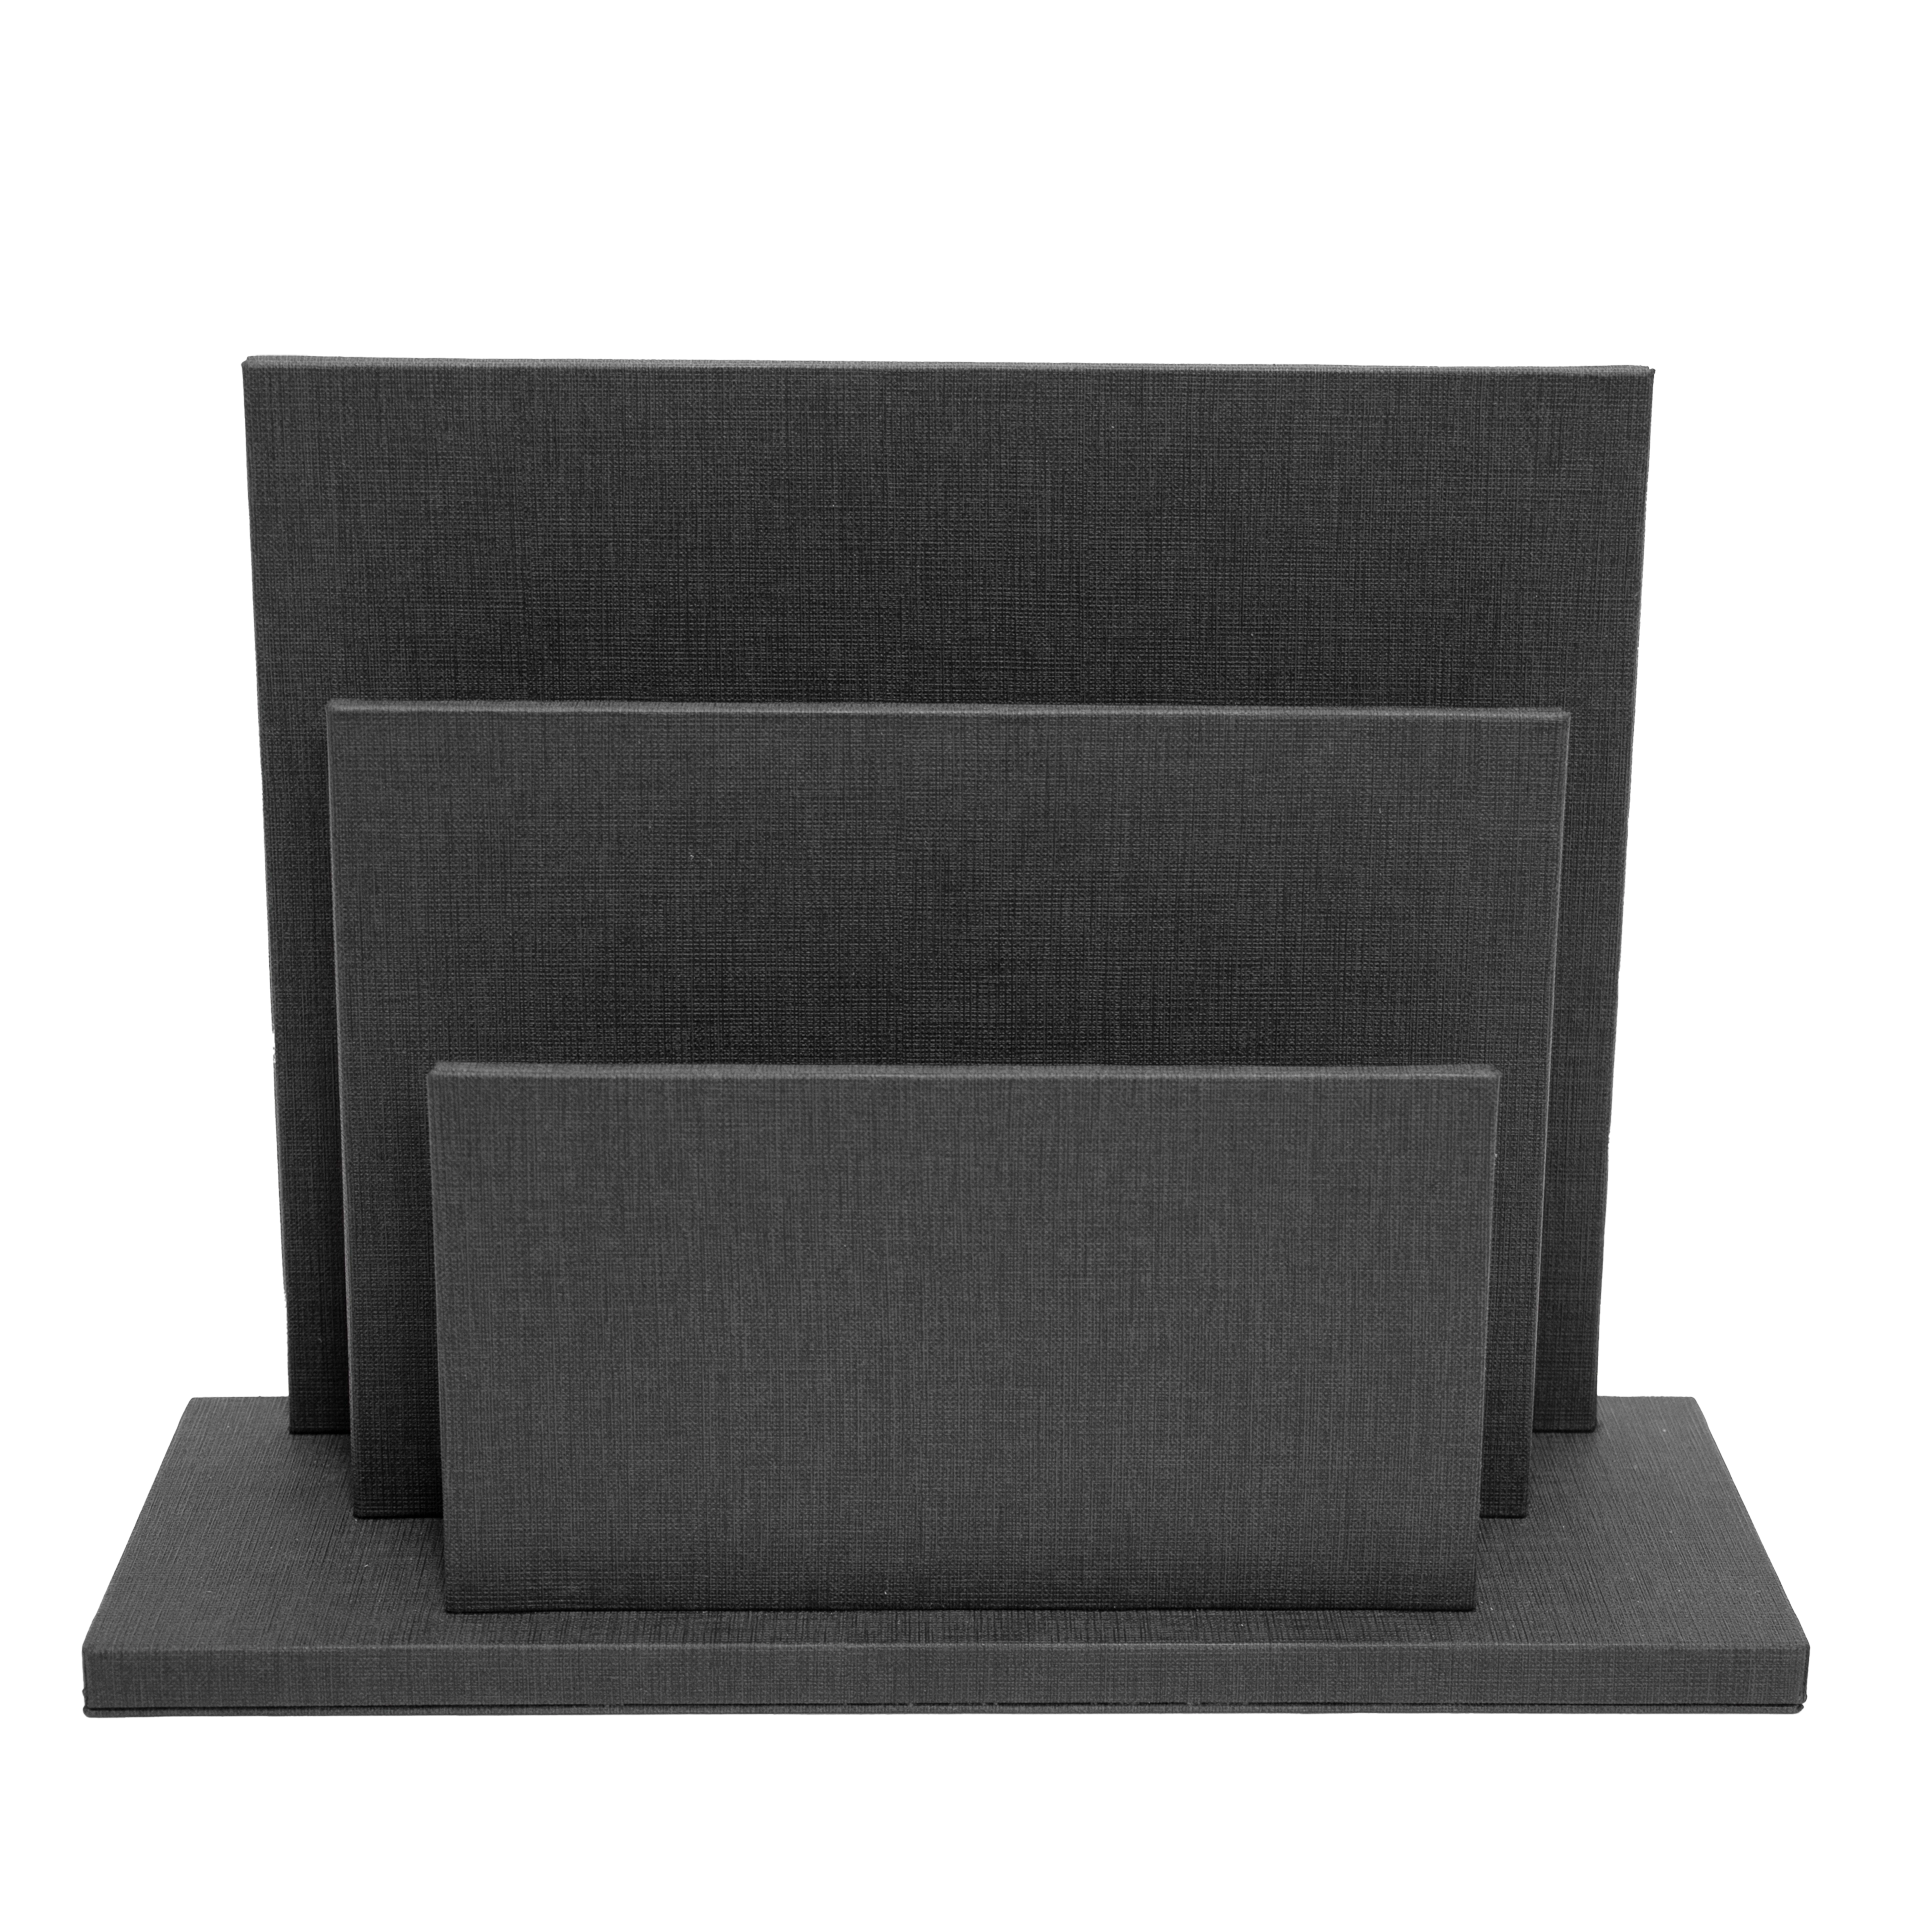 Prospektehalter | La Carte Holz | Ecoleder 4 PASS Farben 33x12x h 24,5 cm